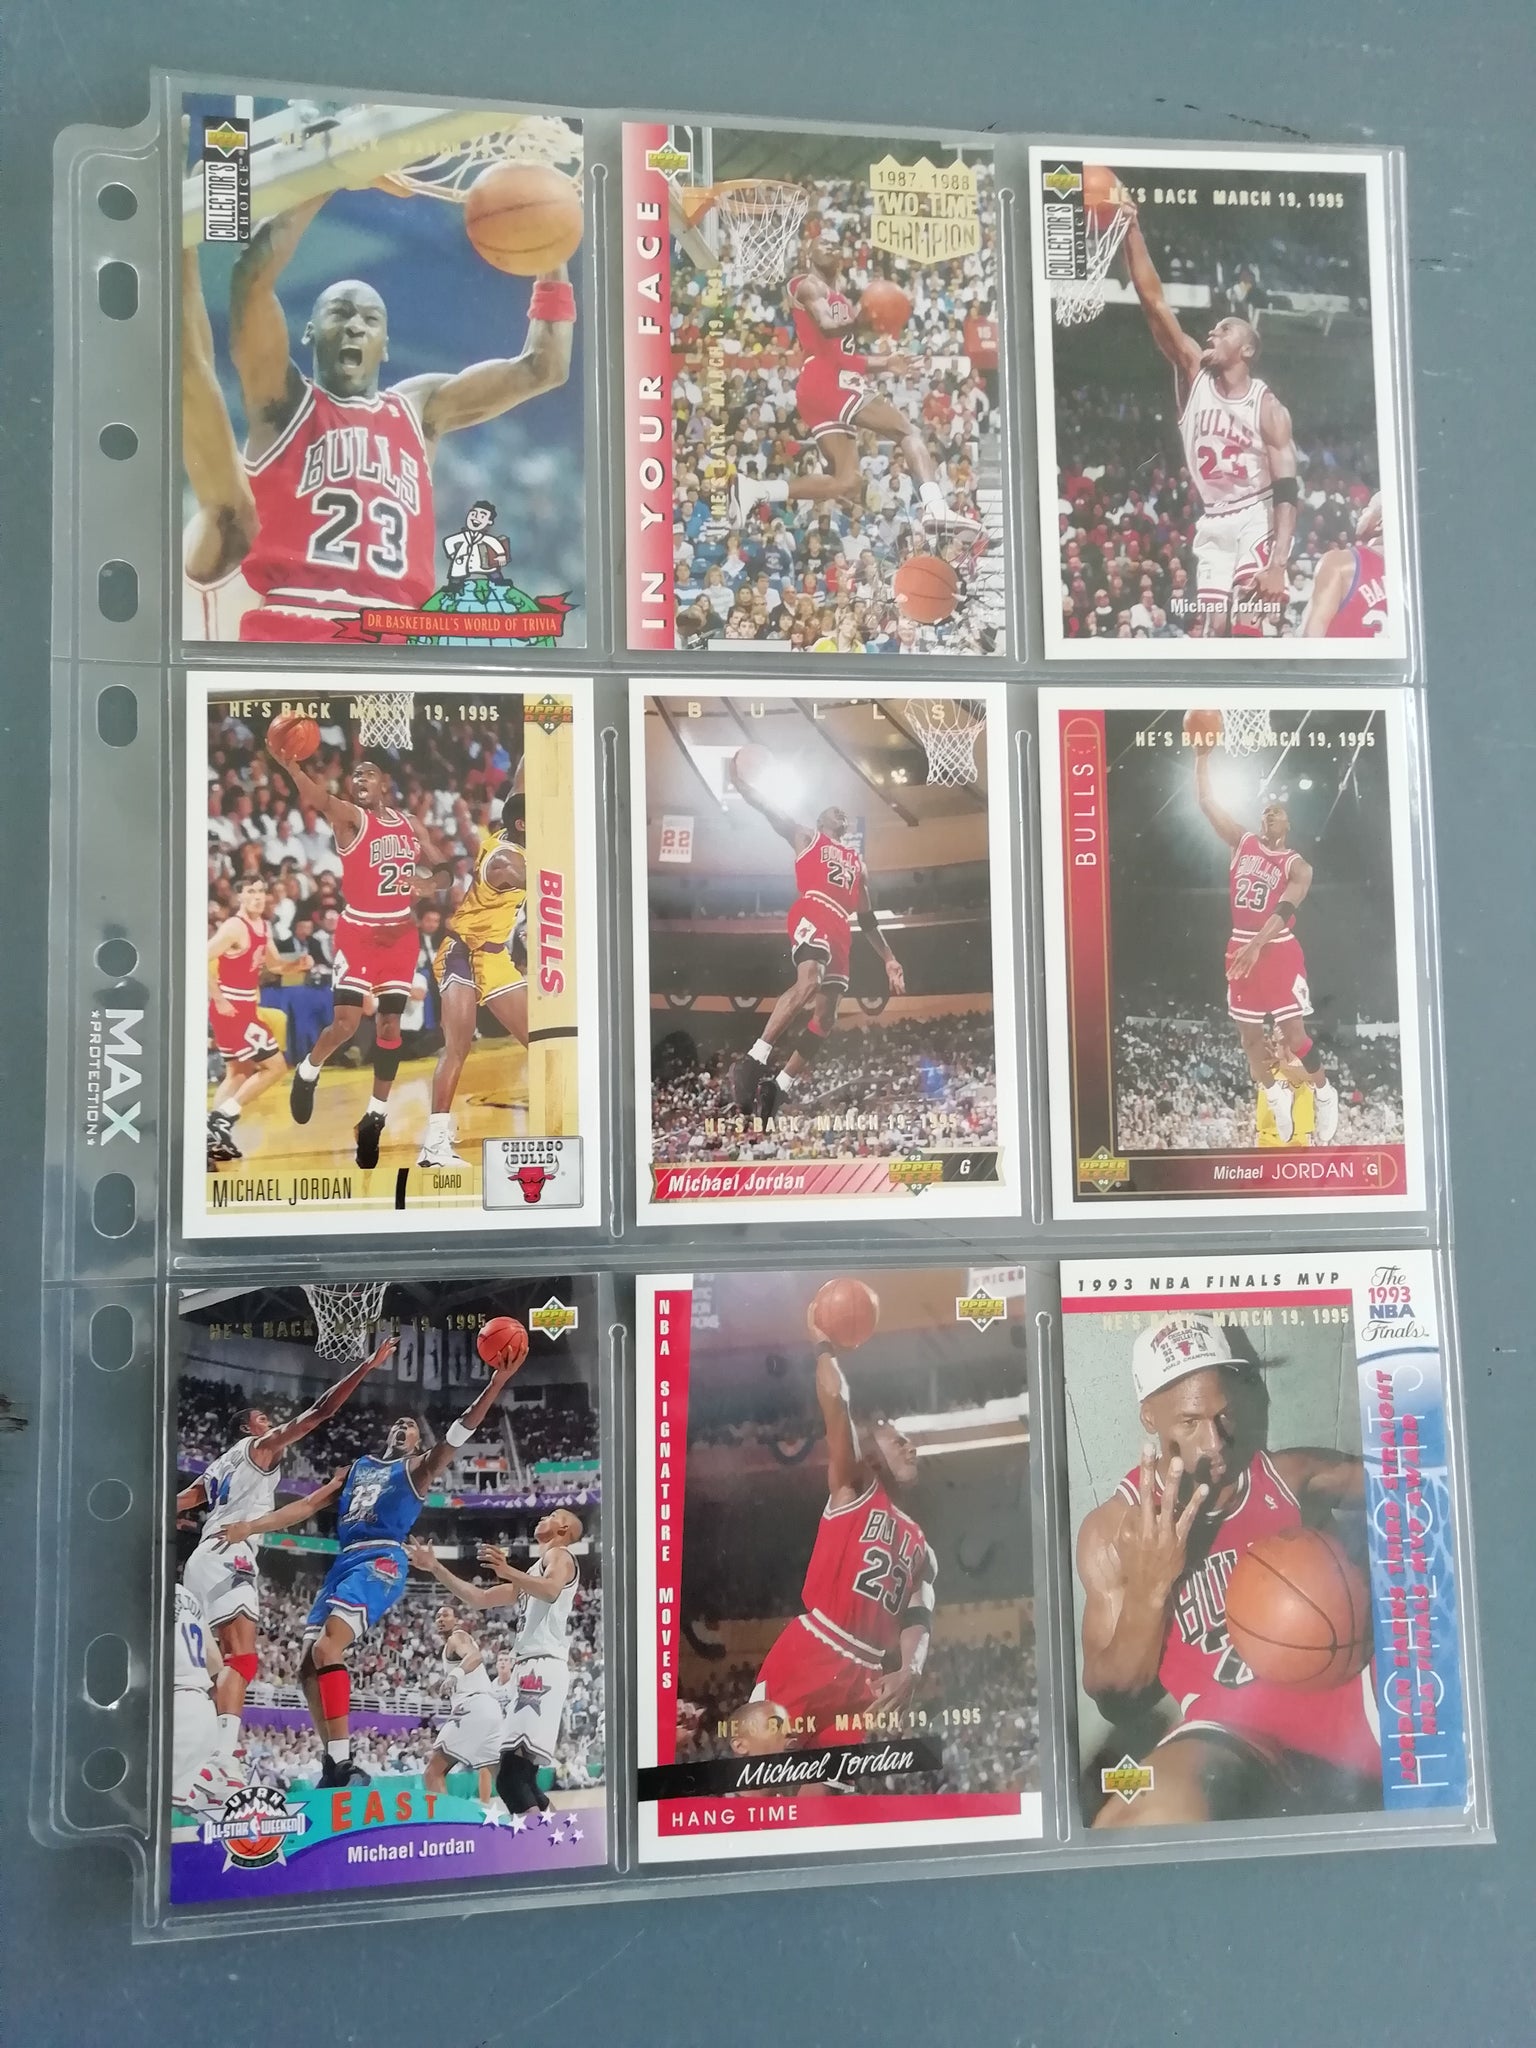 Upper Deck Michael Jordan "He's Back March 1995" Trading Card Set